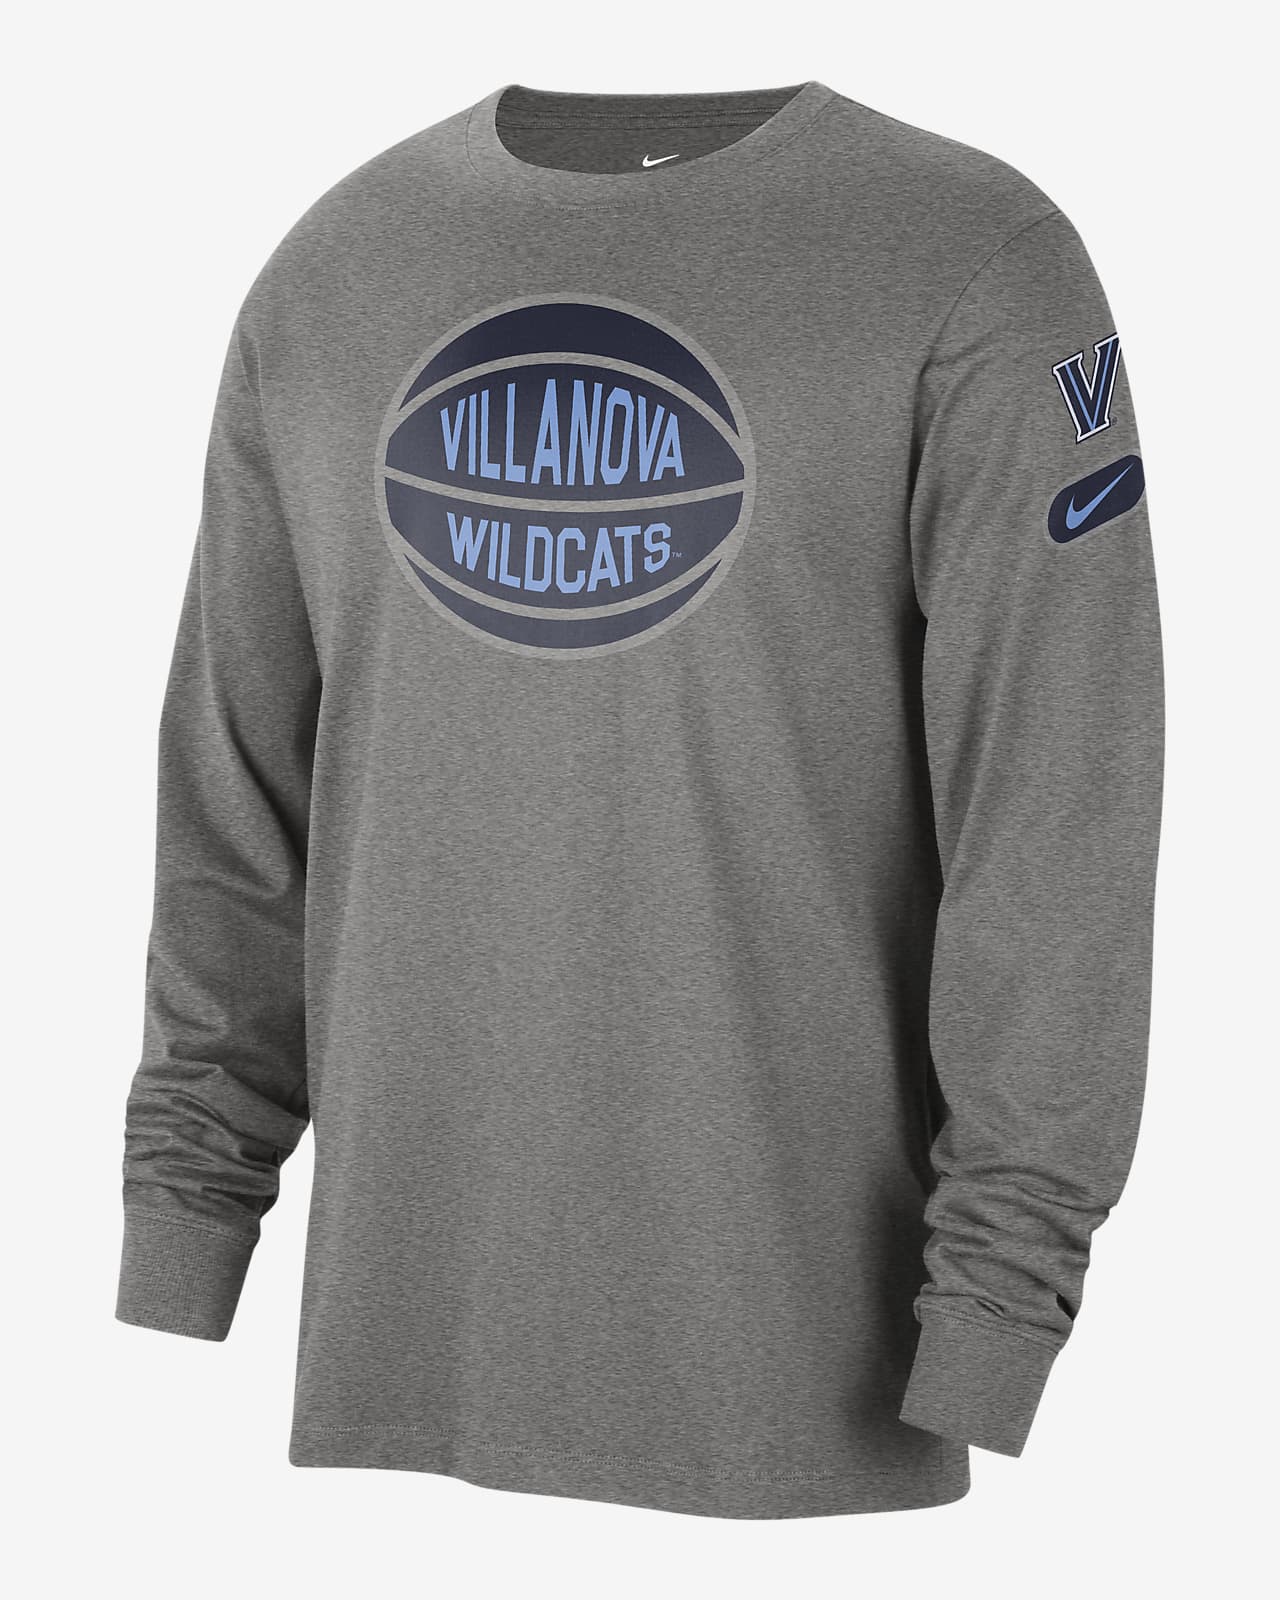 Villanova Fast Break Men's Nike College Long-Sleeve T-Shirt